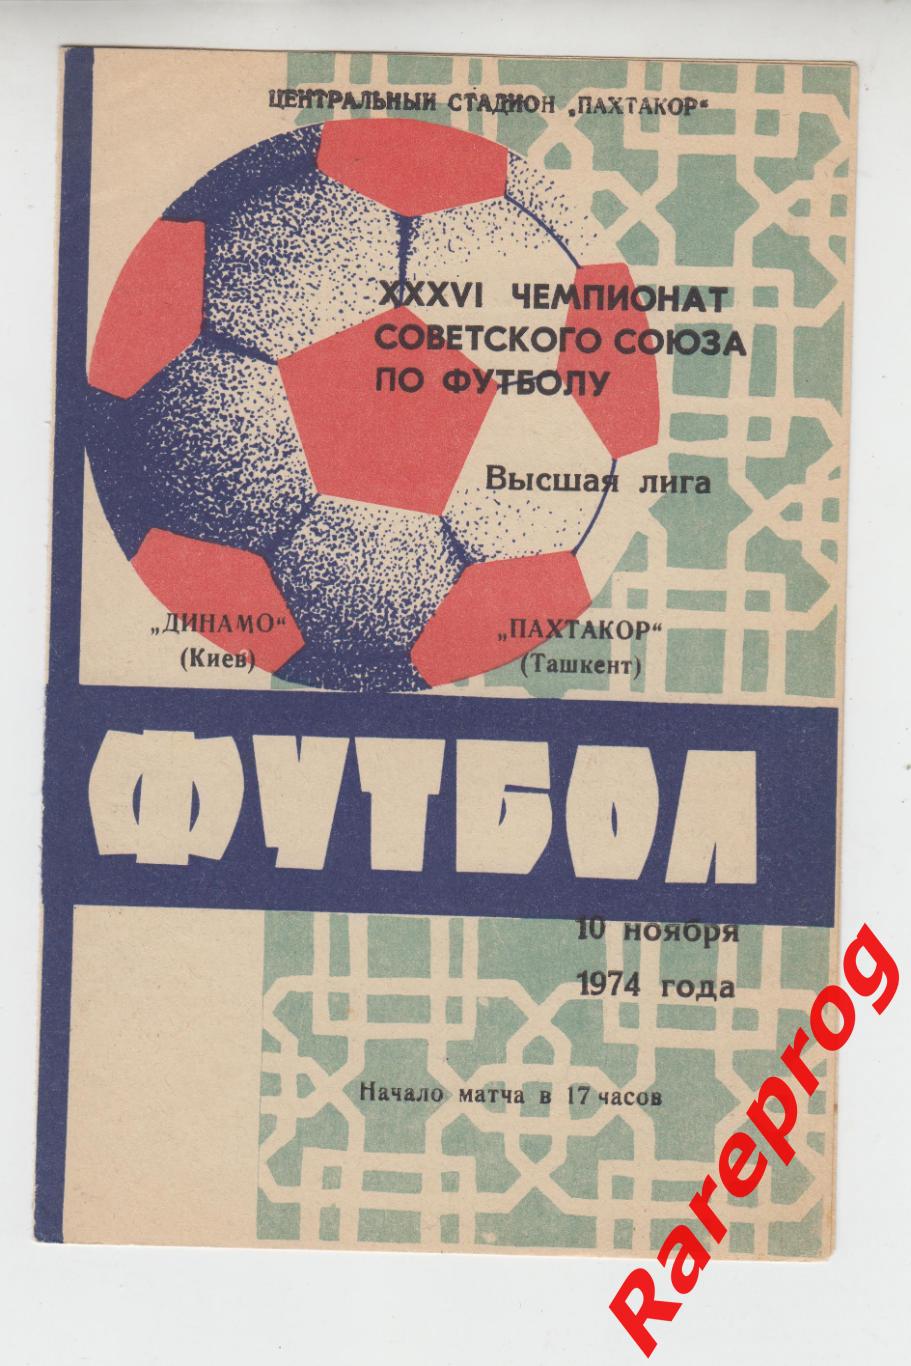 Пахтакор Ташкент - Динамо Киев - 1974